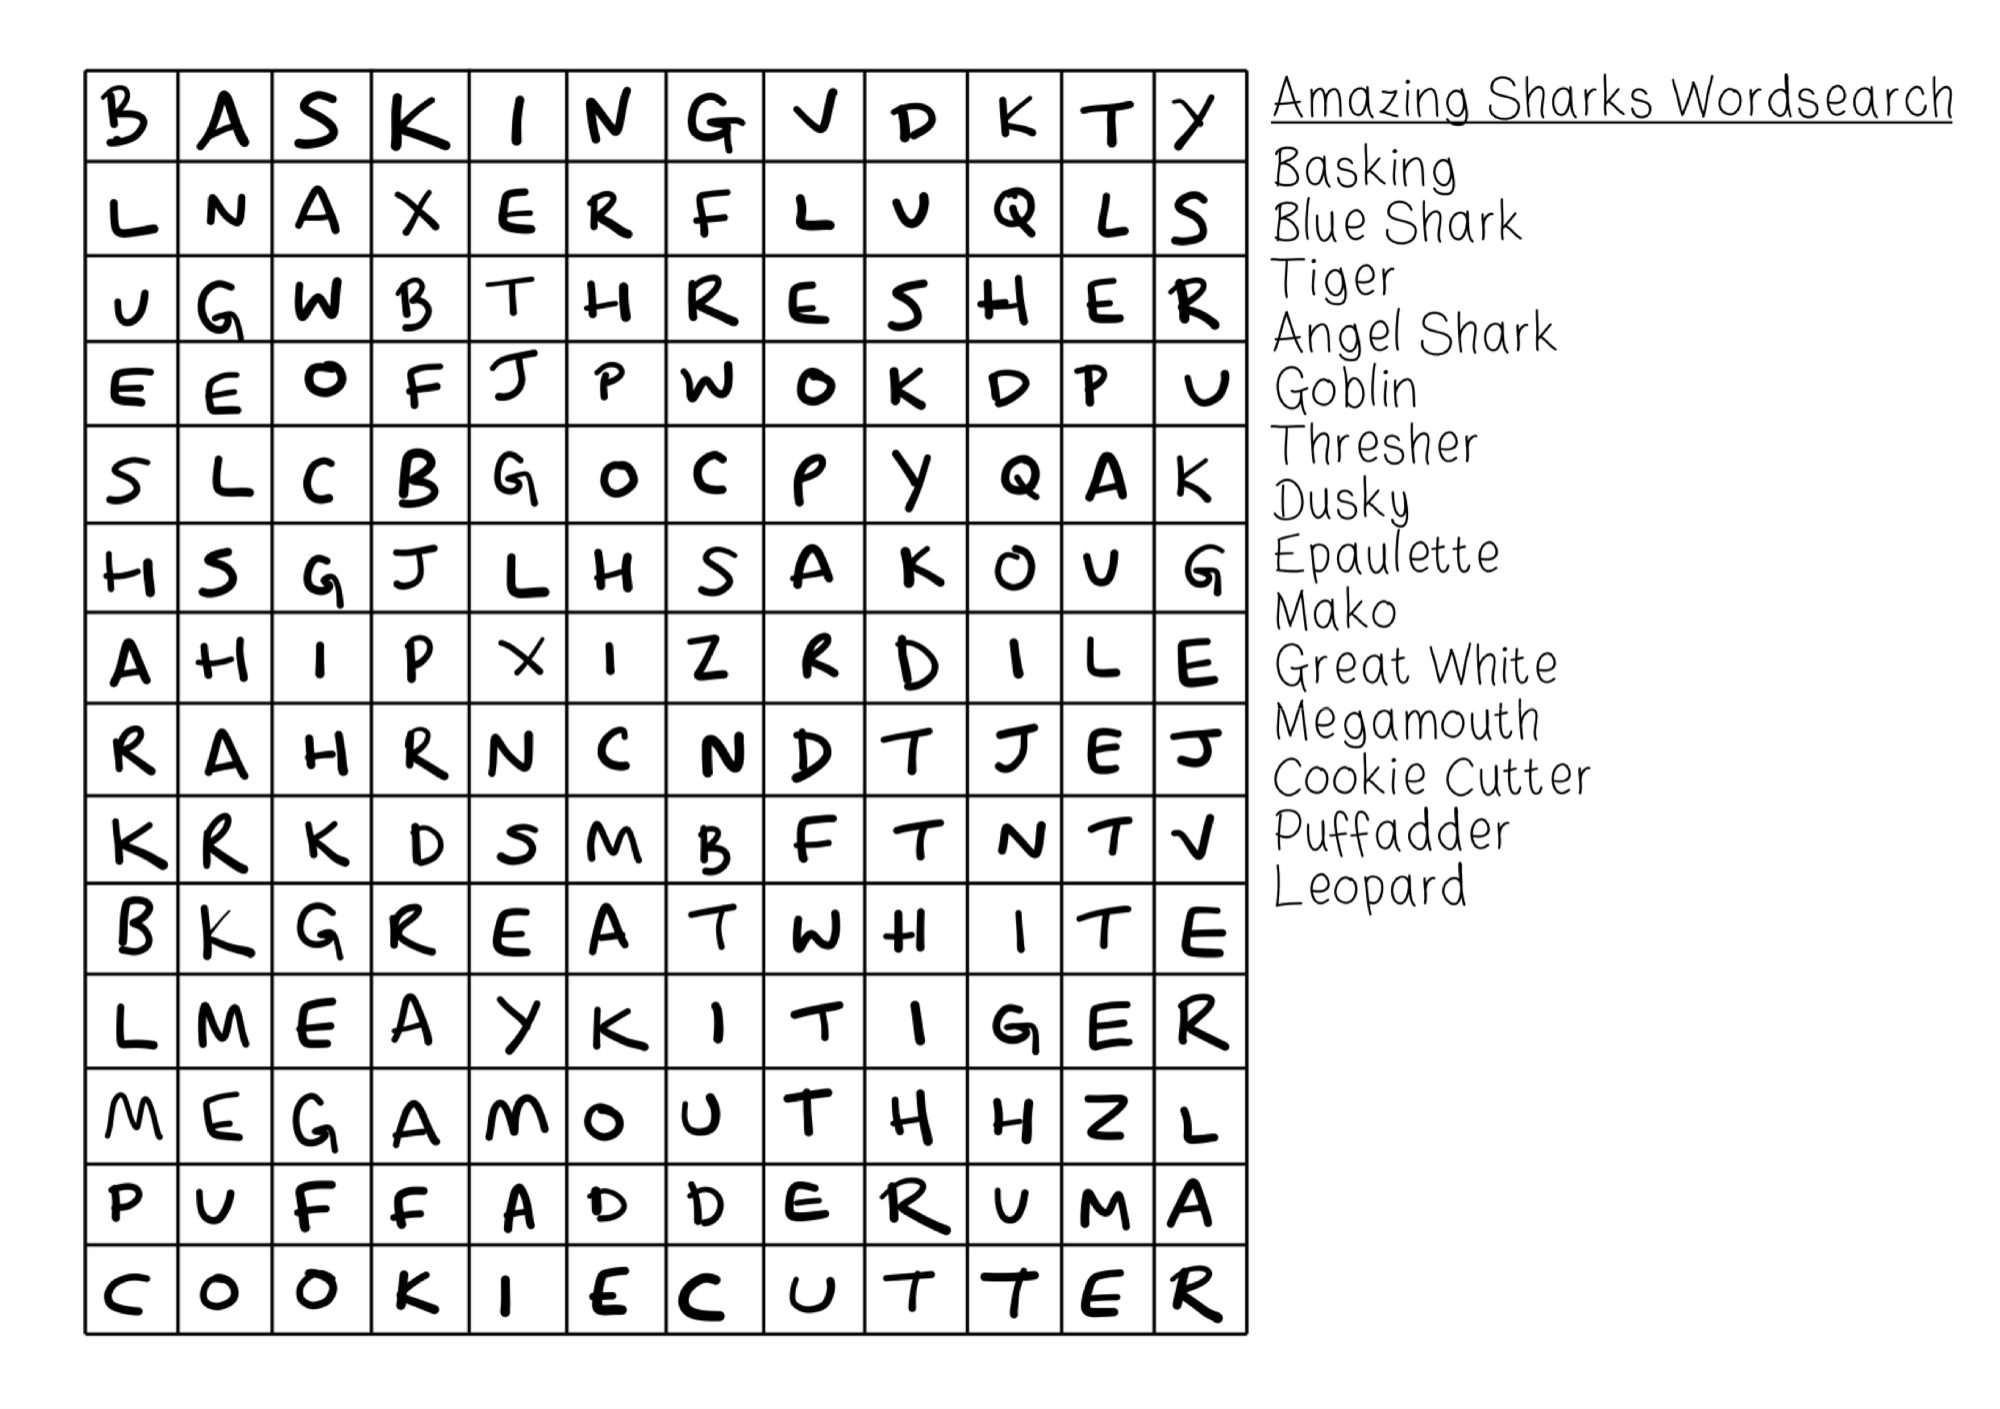 Amazing sharks wordsearch